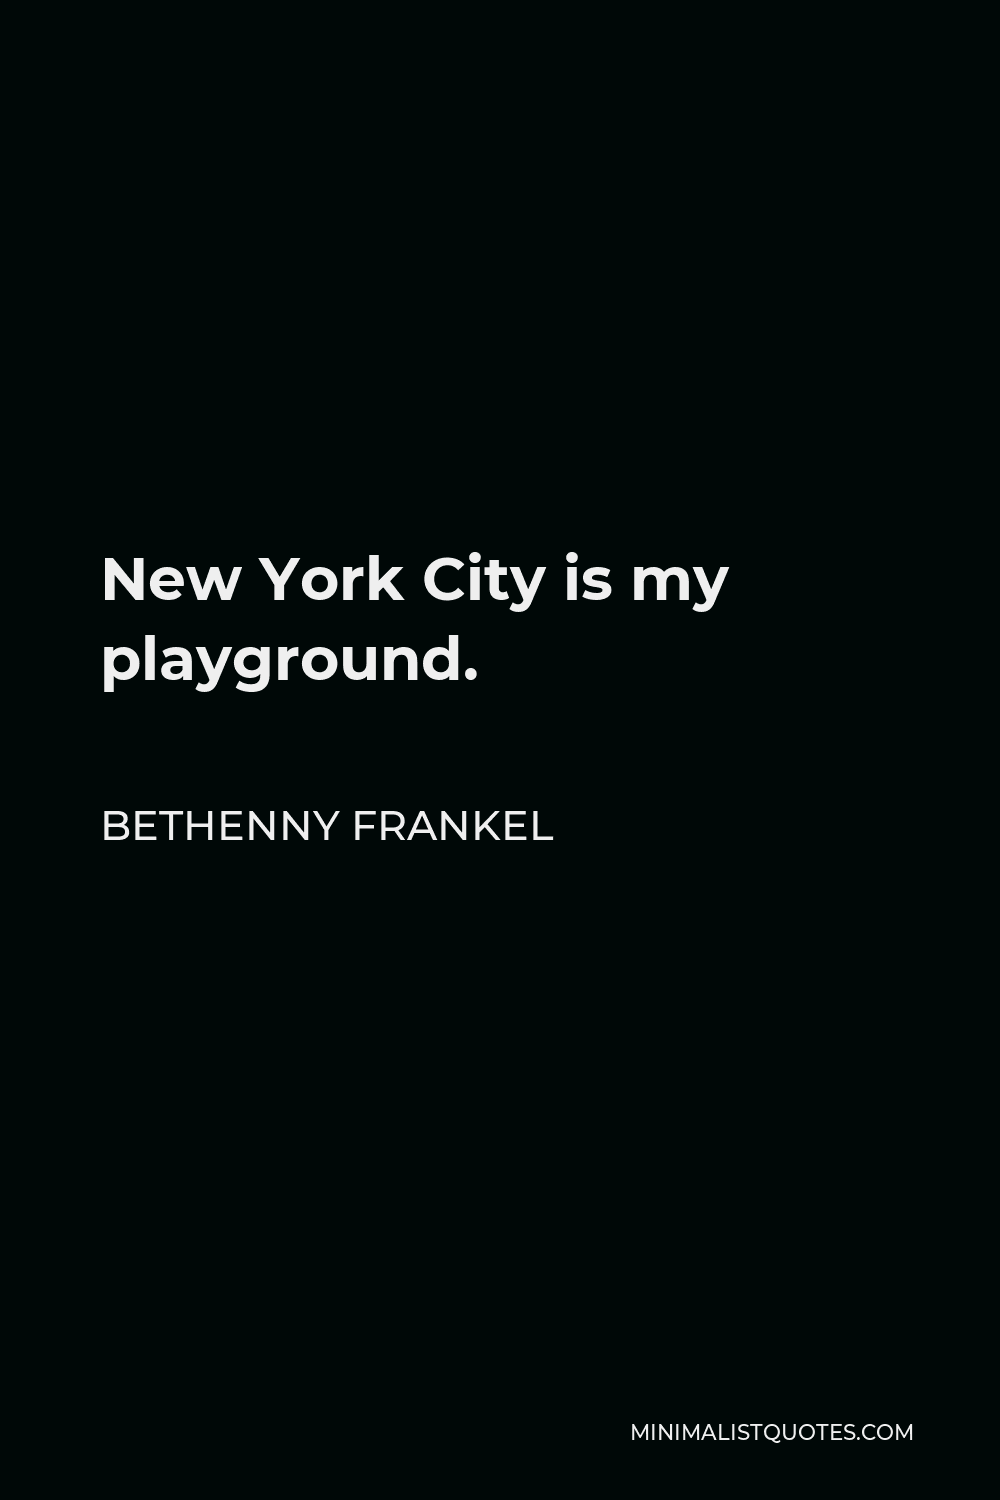 Bethenny Frankel Quote - New York City is my playground.